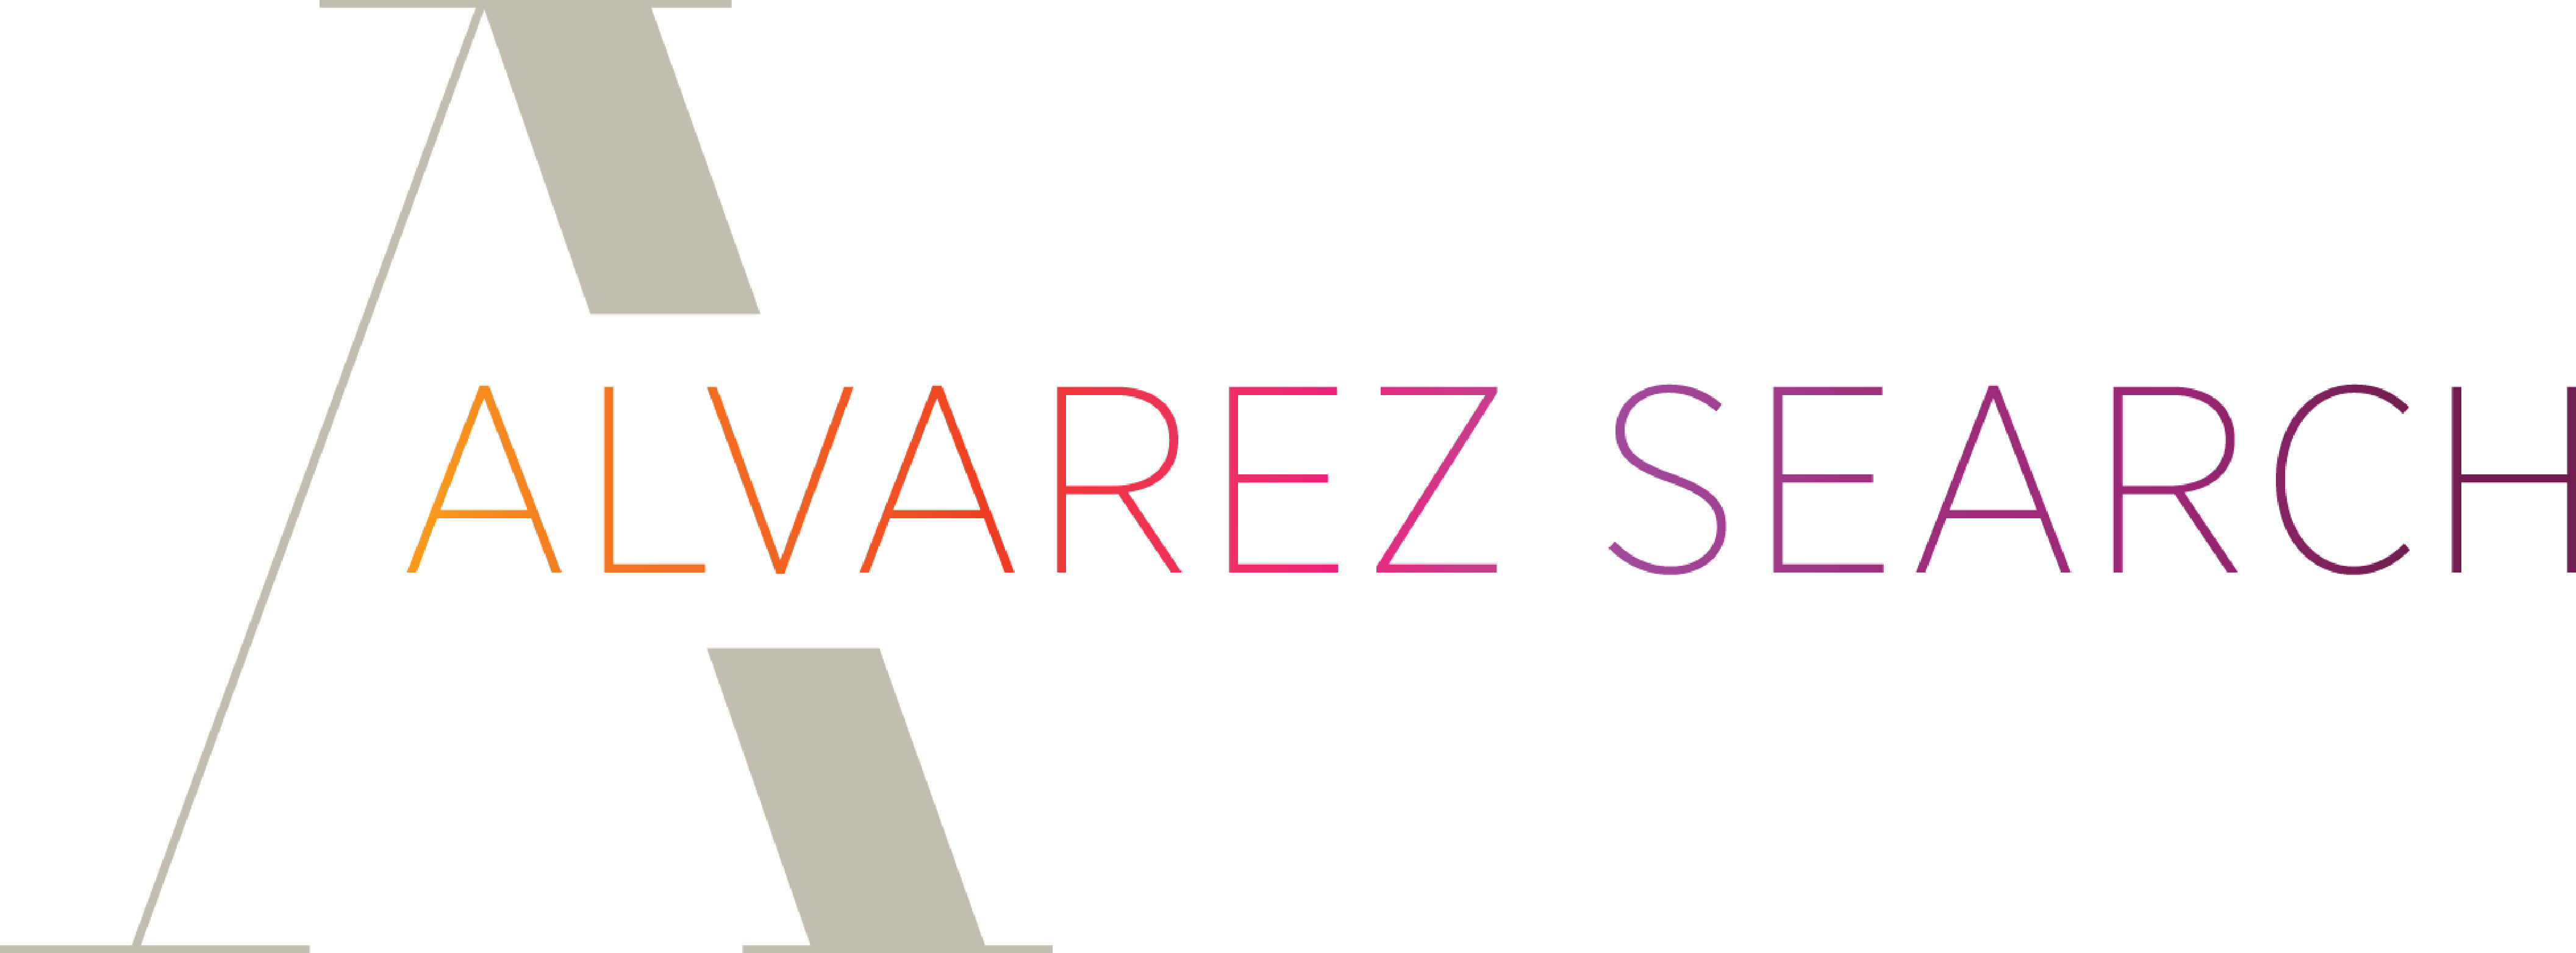 Alvarez Search Logo